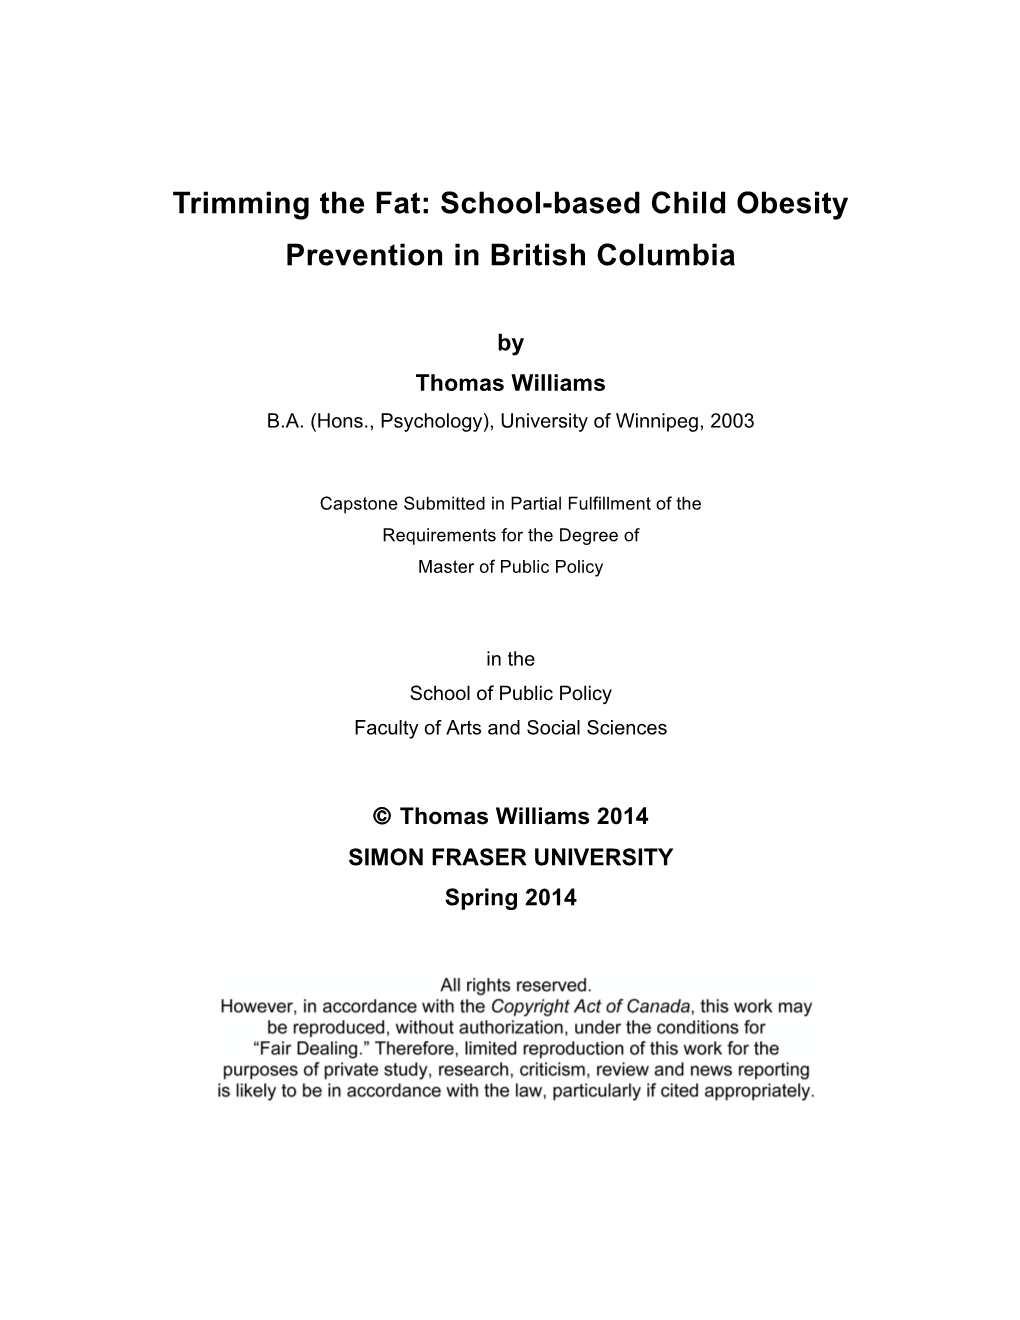 School-Based Child Obesity Prevention in British Columbia